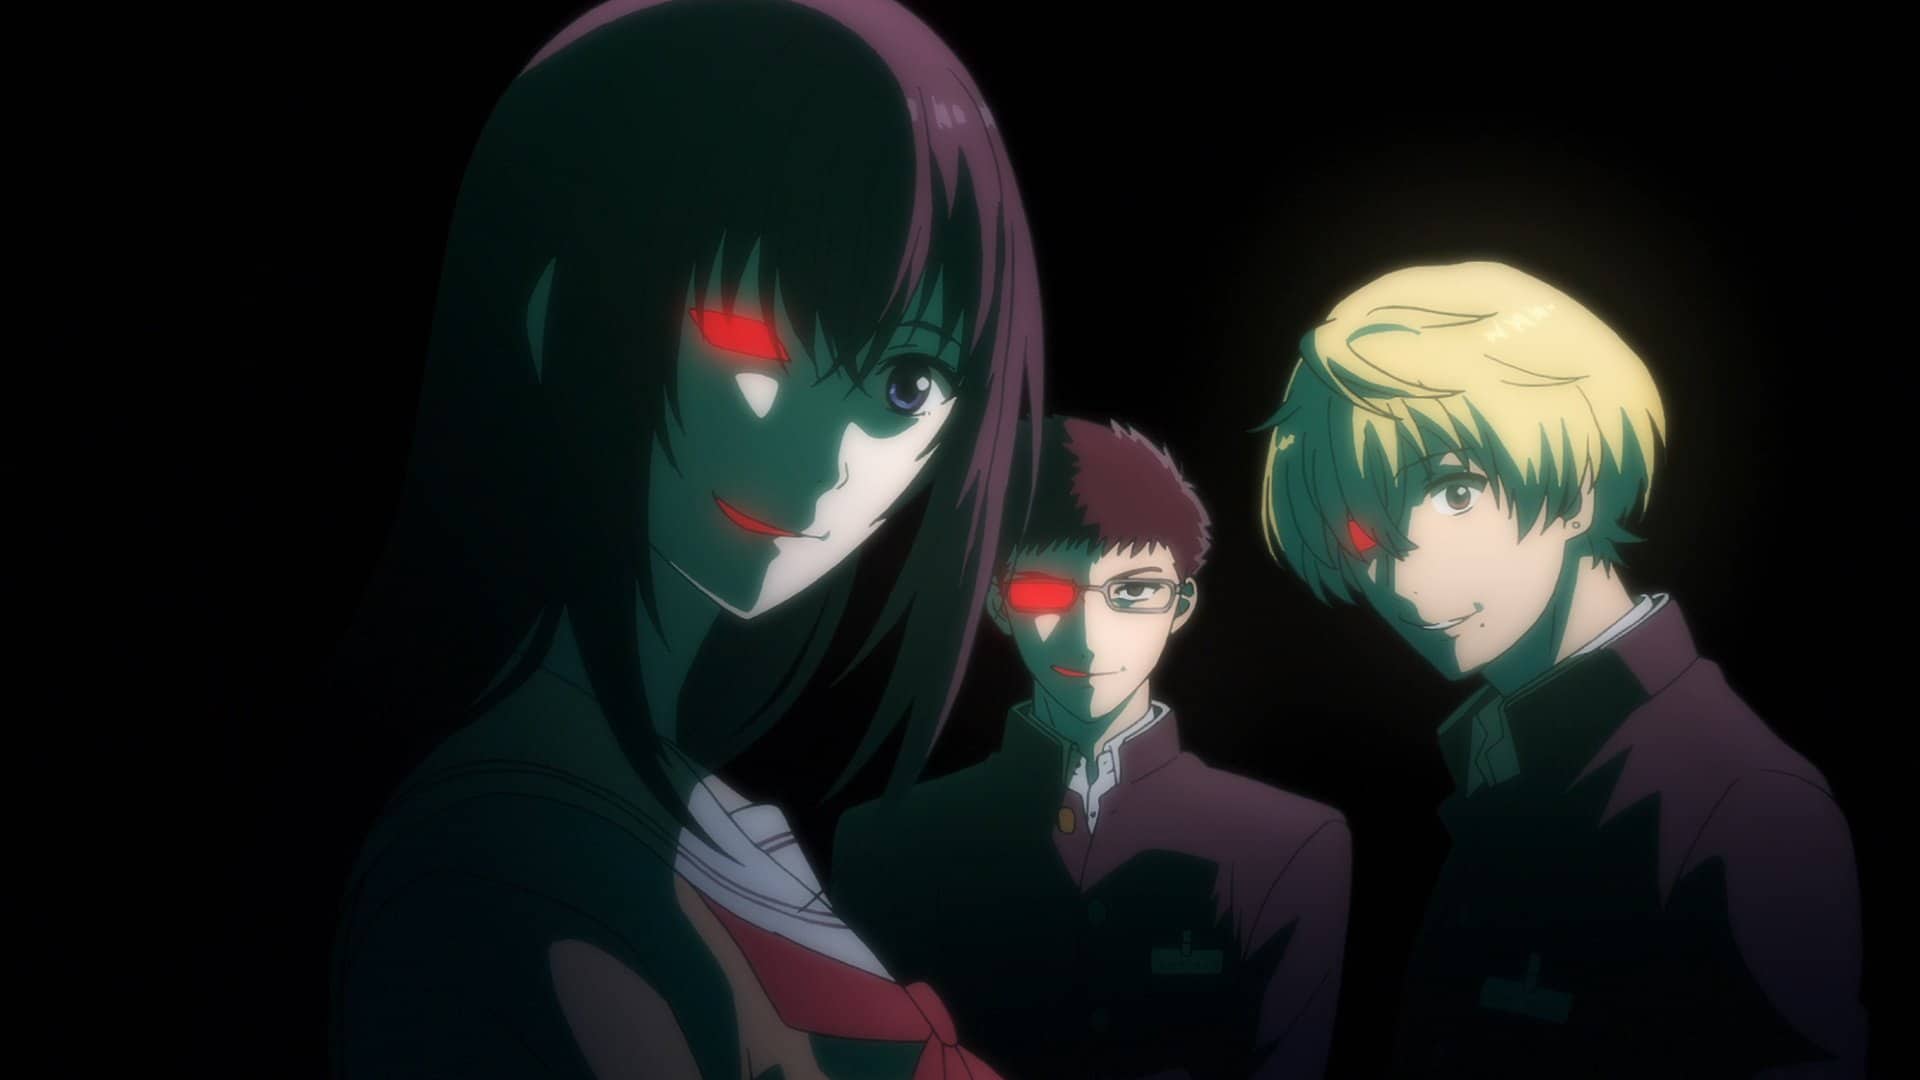 Shibe, Tenji, and Shiho looking sinister